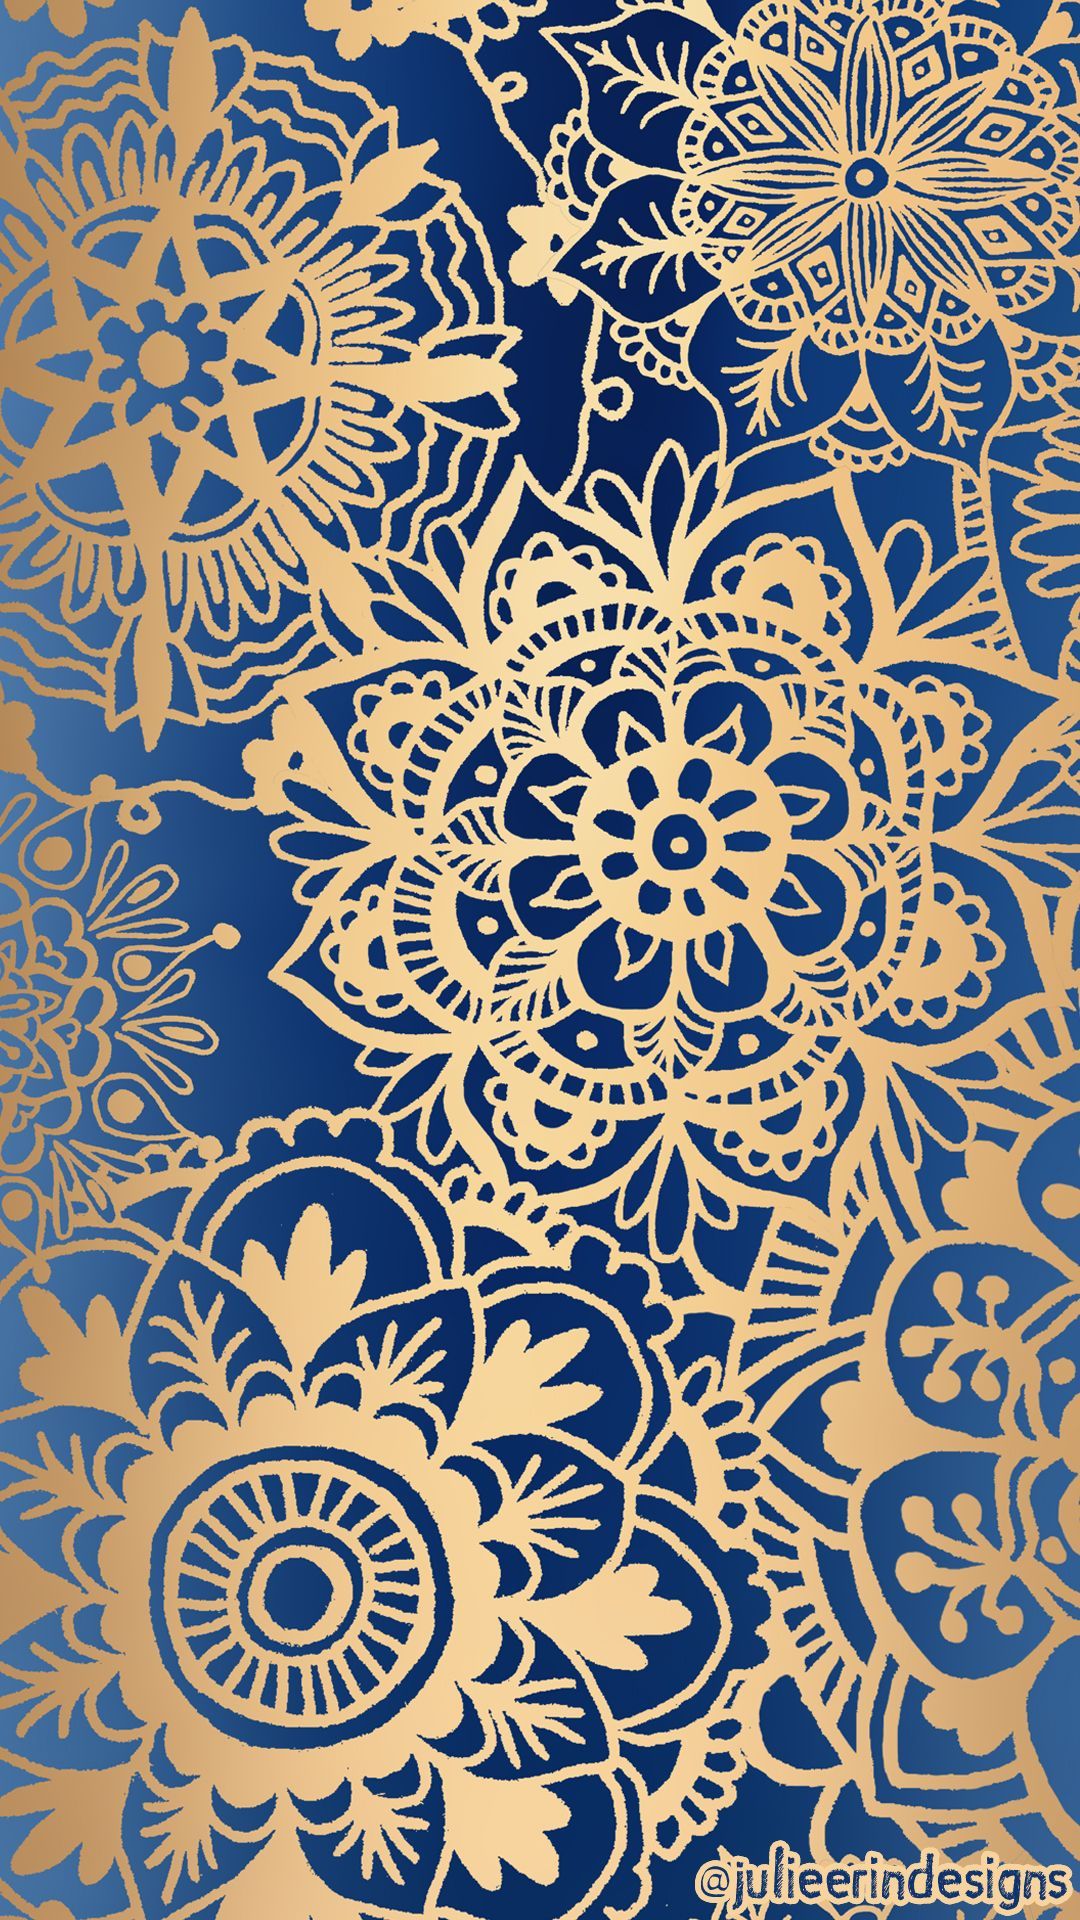 Free Mandala Mobile Phone Wallpaper. Mandala wallpaper, Blue